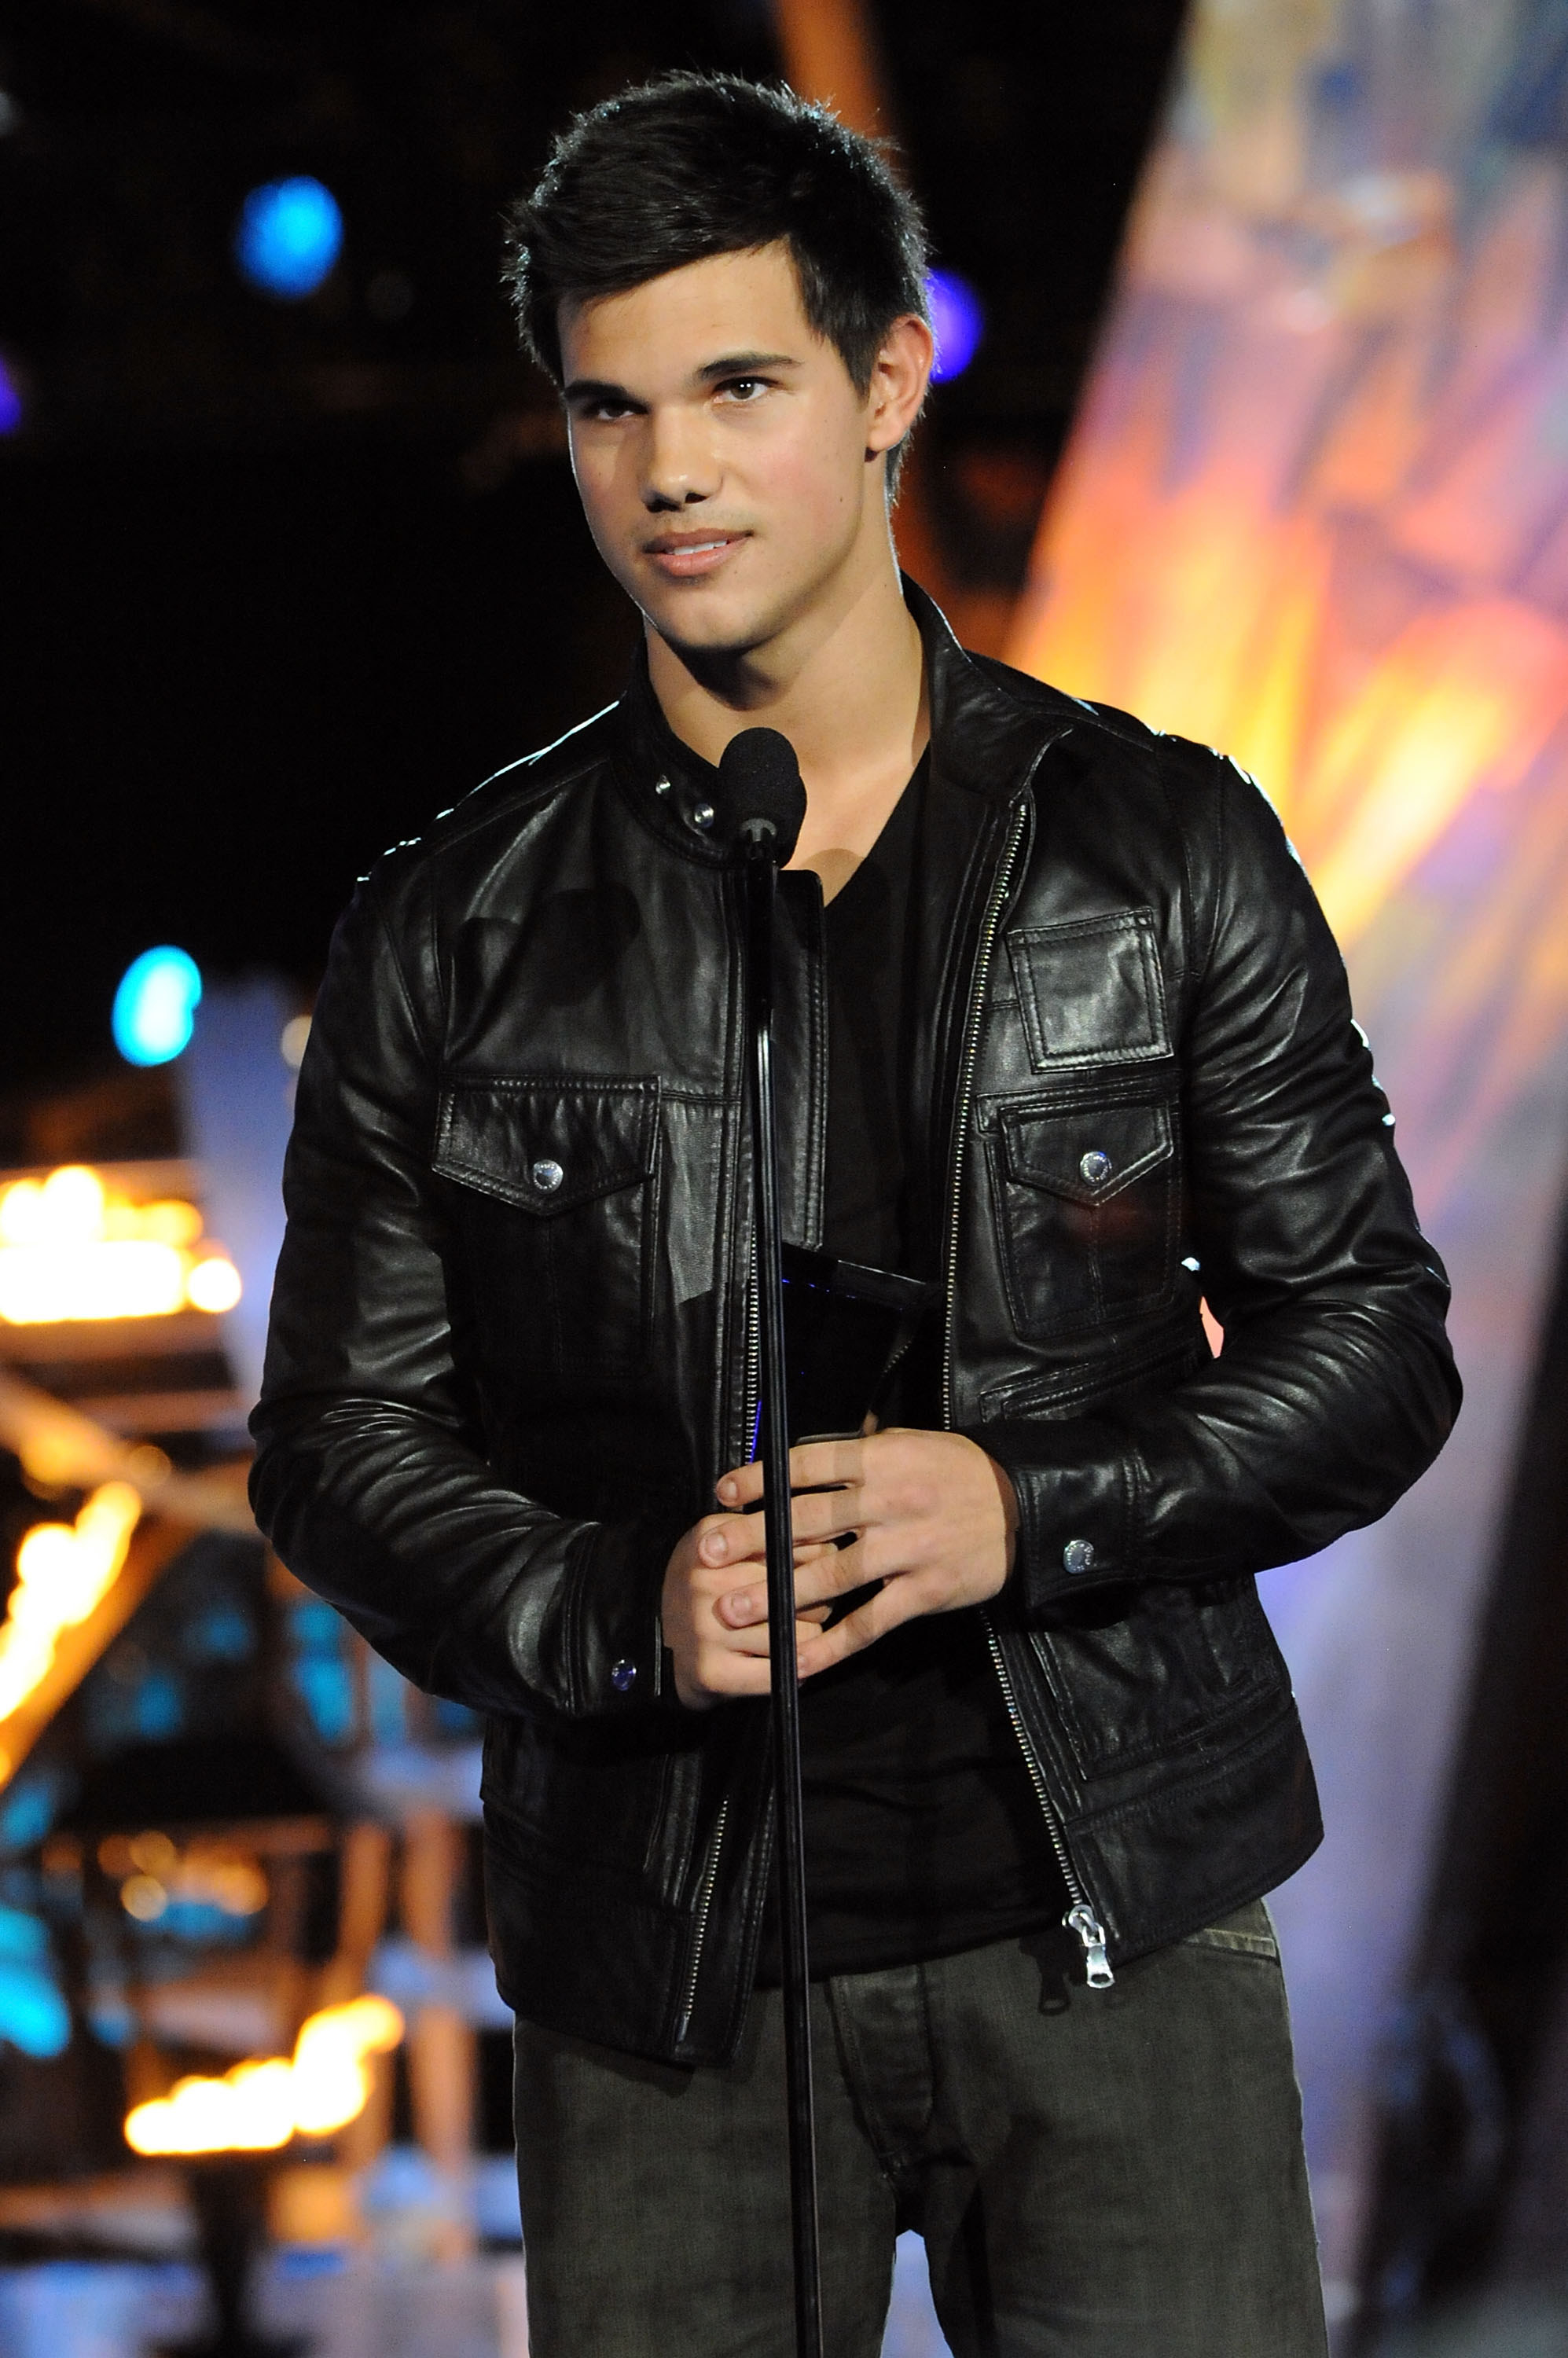 Taylor Lautner's “Resentment” Toward His “Twilight” Fame